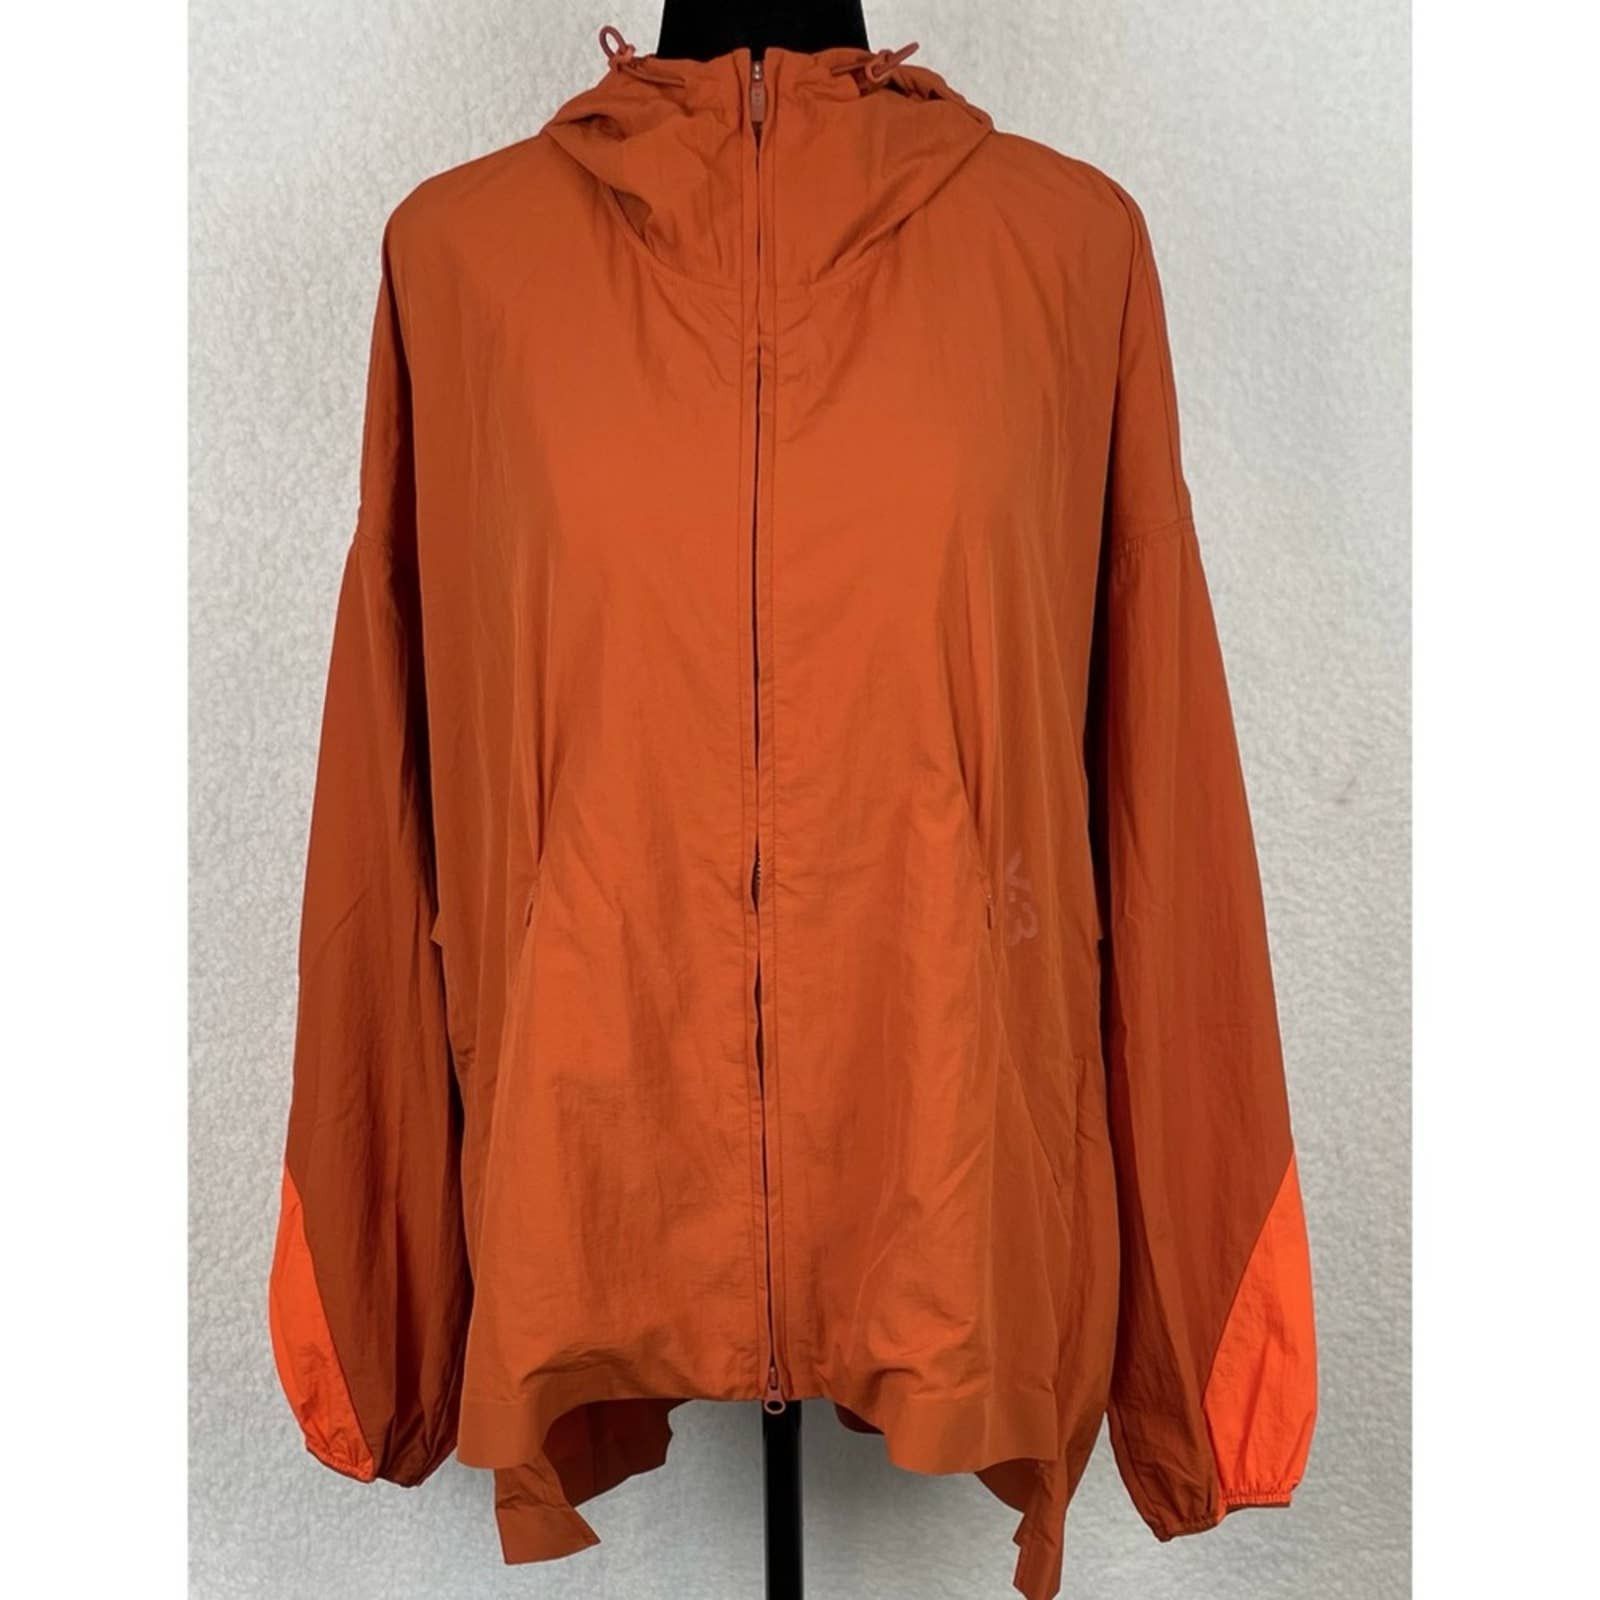 Y-3 Y-3 • Yohji Yamamoto Adidas Orange Hooded Windbreaker Jacket Size XXS / US 00 / IT 34 - 5 Thumbnail